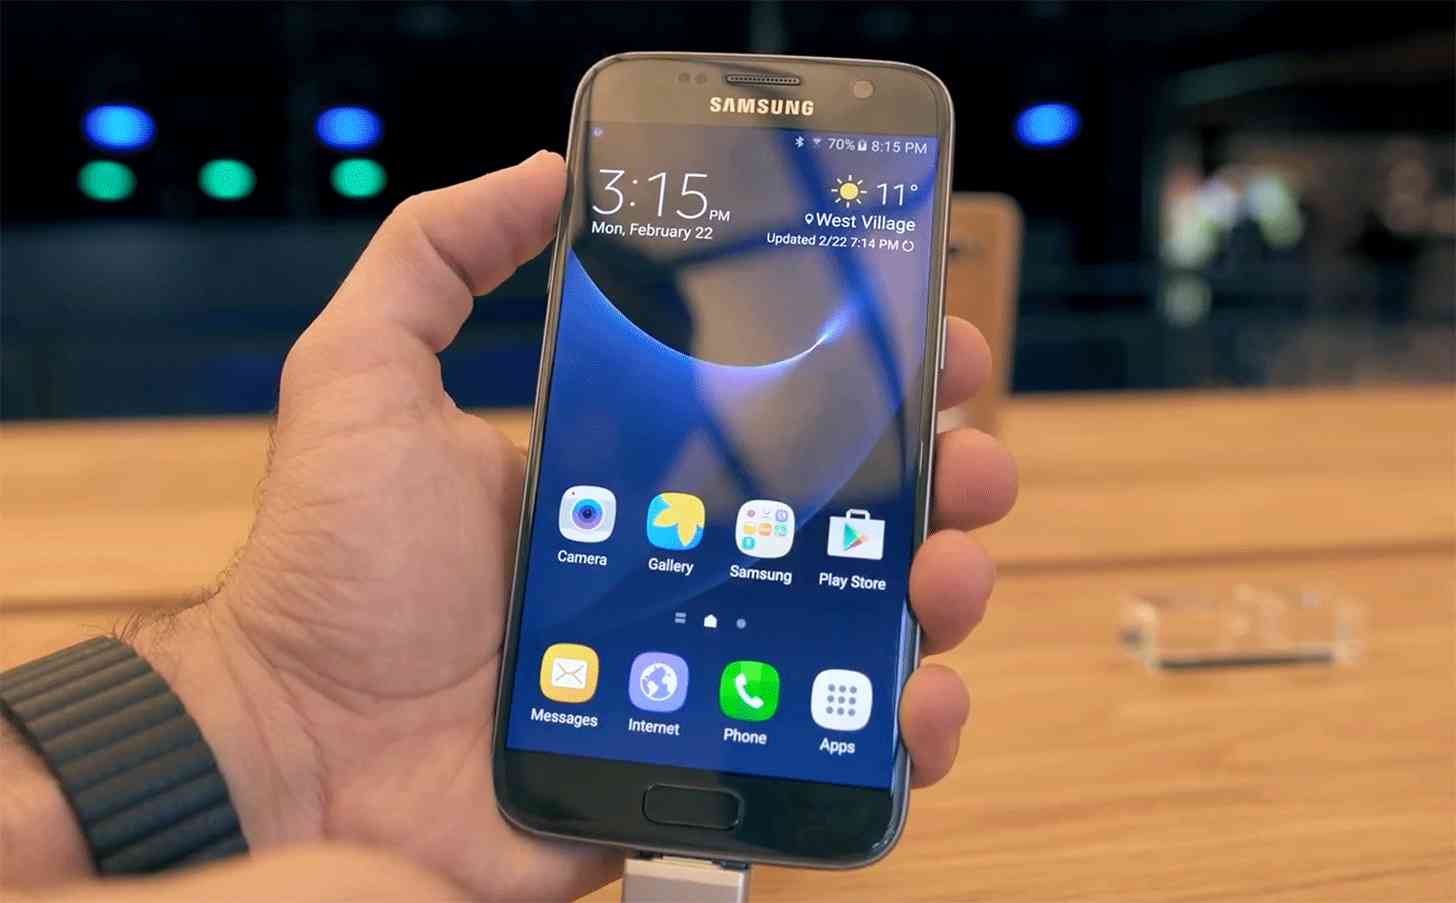 Samsung Galaxy S7 display